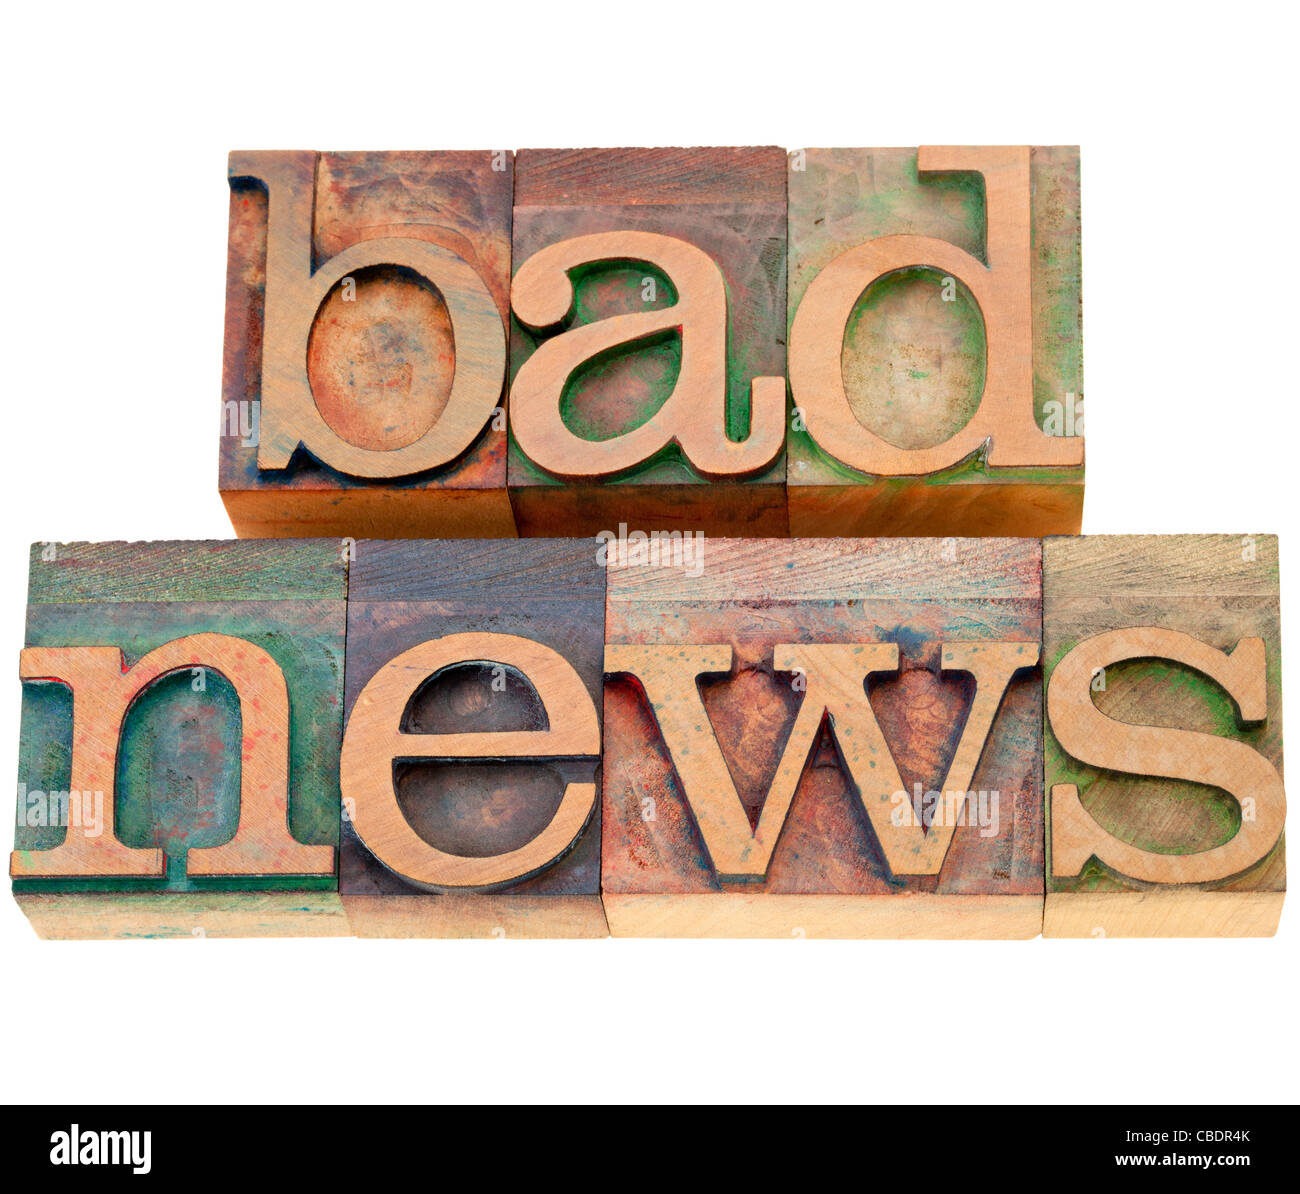 bad news - isolated words in vintage wood letterpress printing blocks Stock Photo